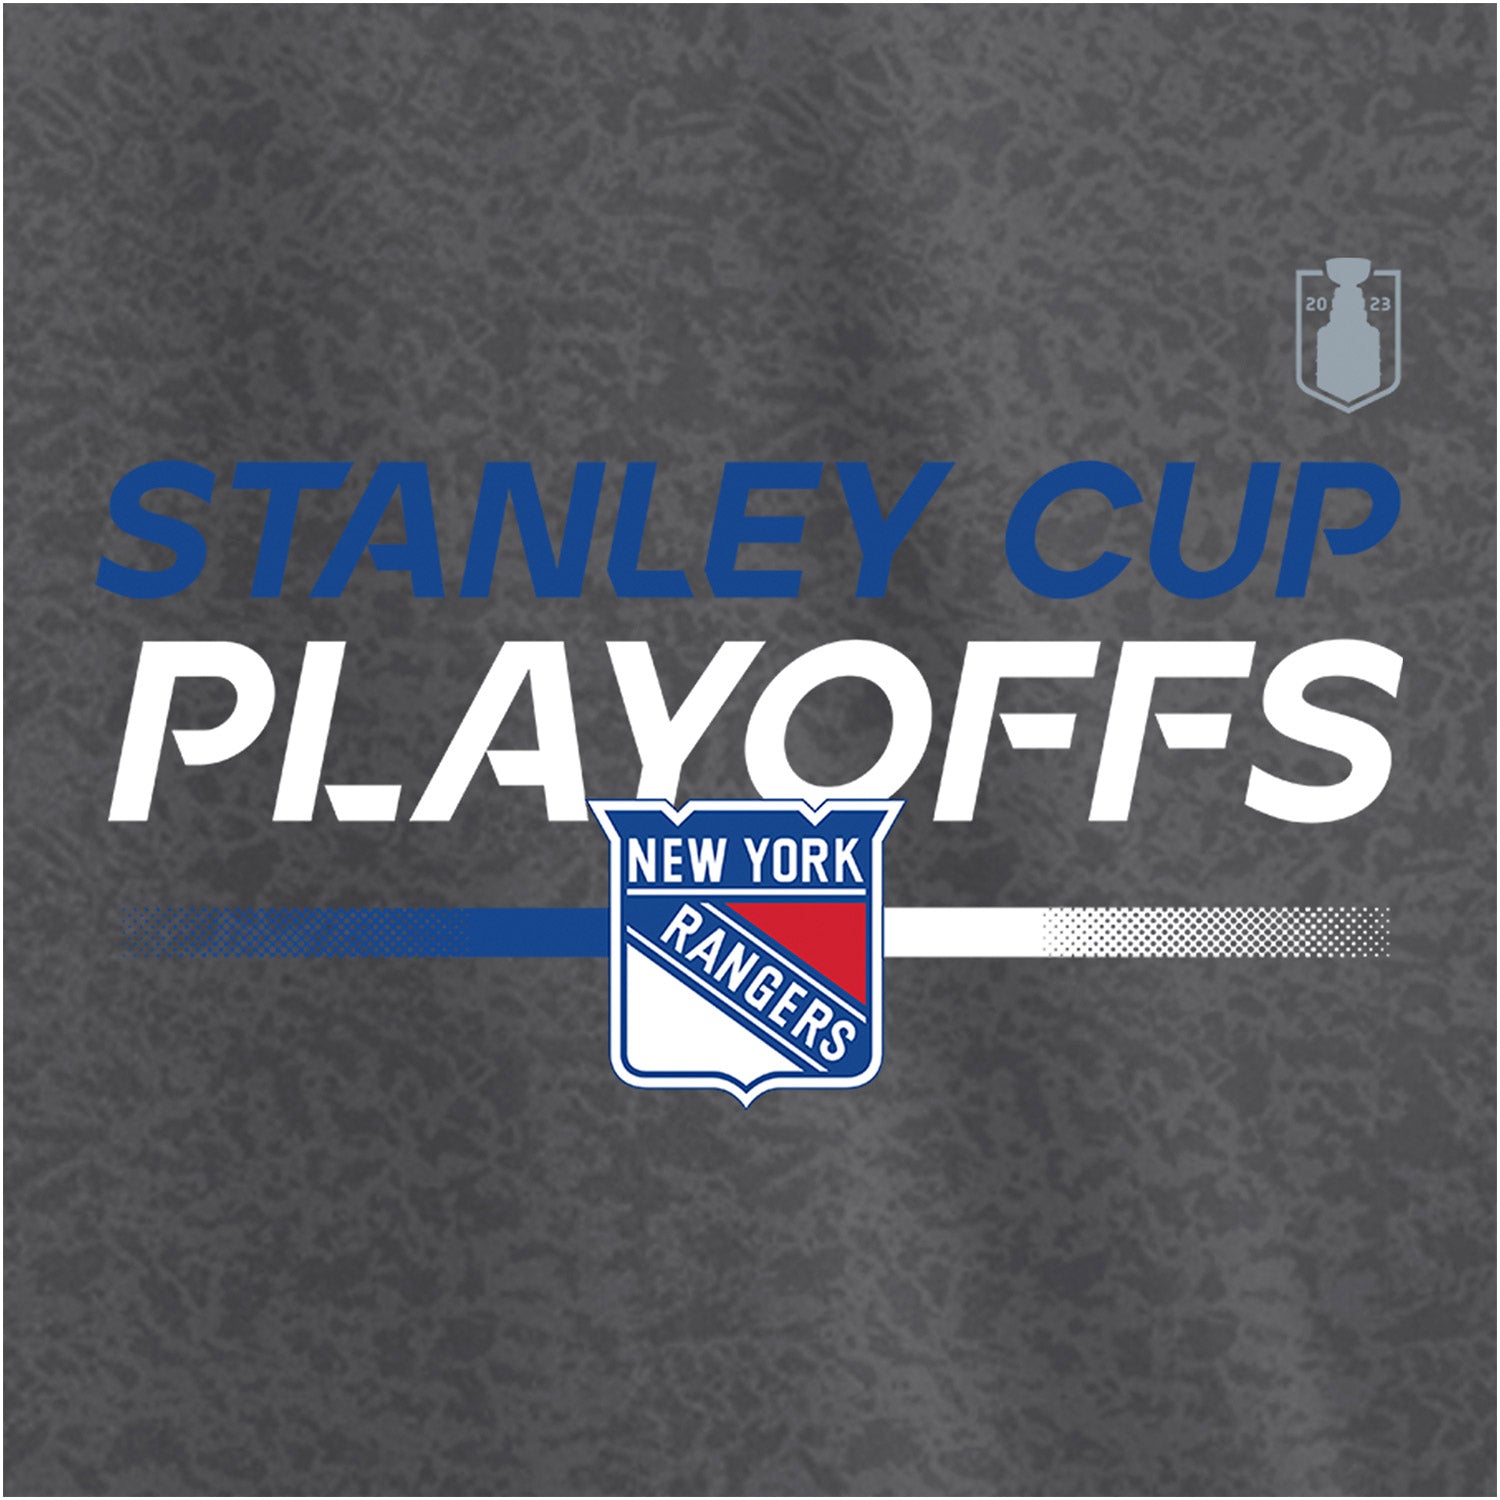 Fanatics new NHL deal featuring 2023 Stanley Cup Playoffs merch